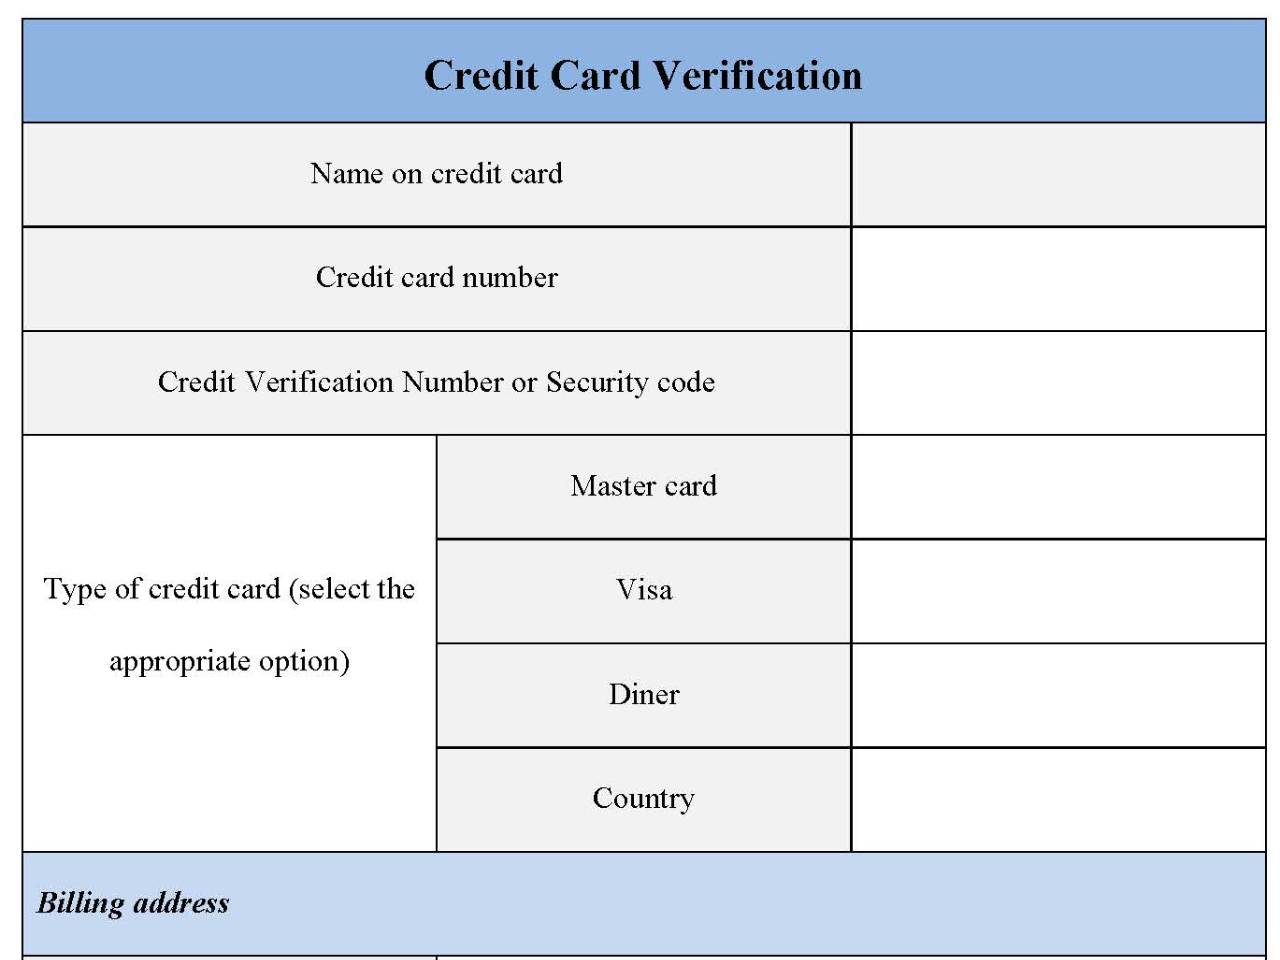 Credit Card Verification Form